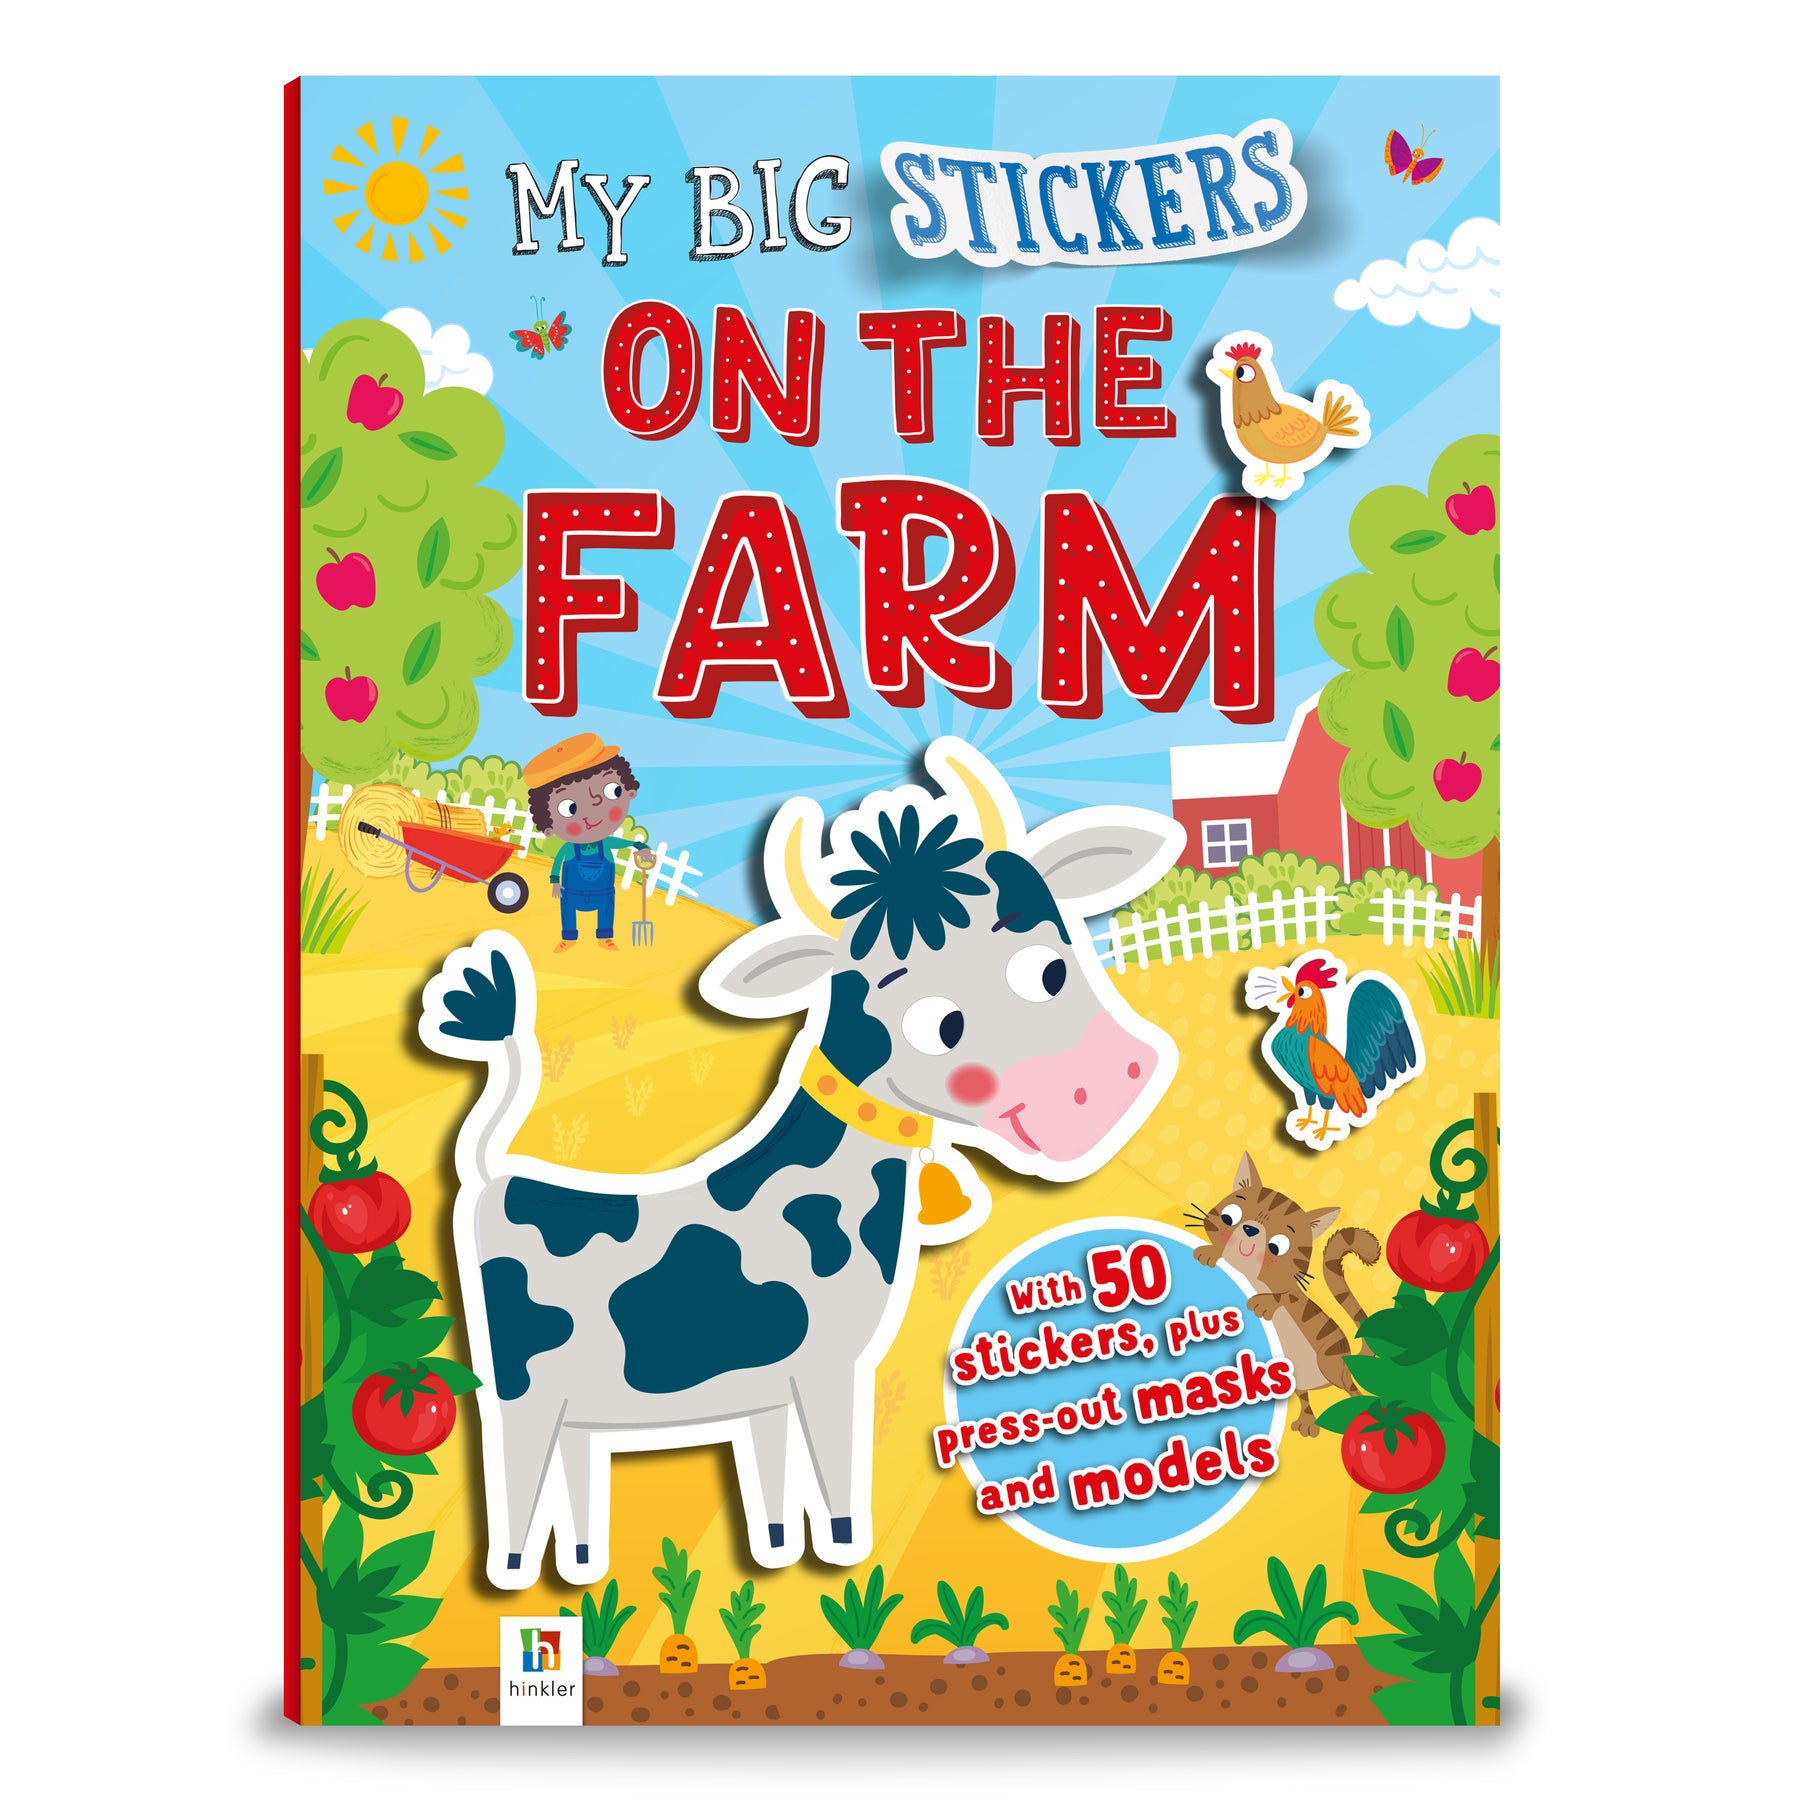 On the farm sticker book